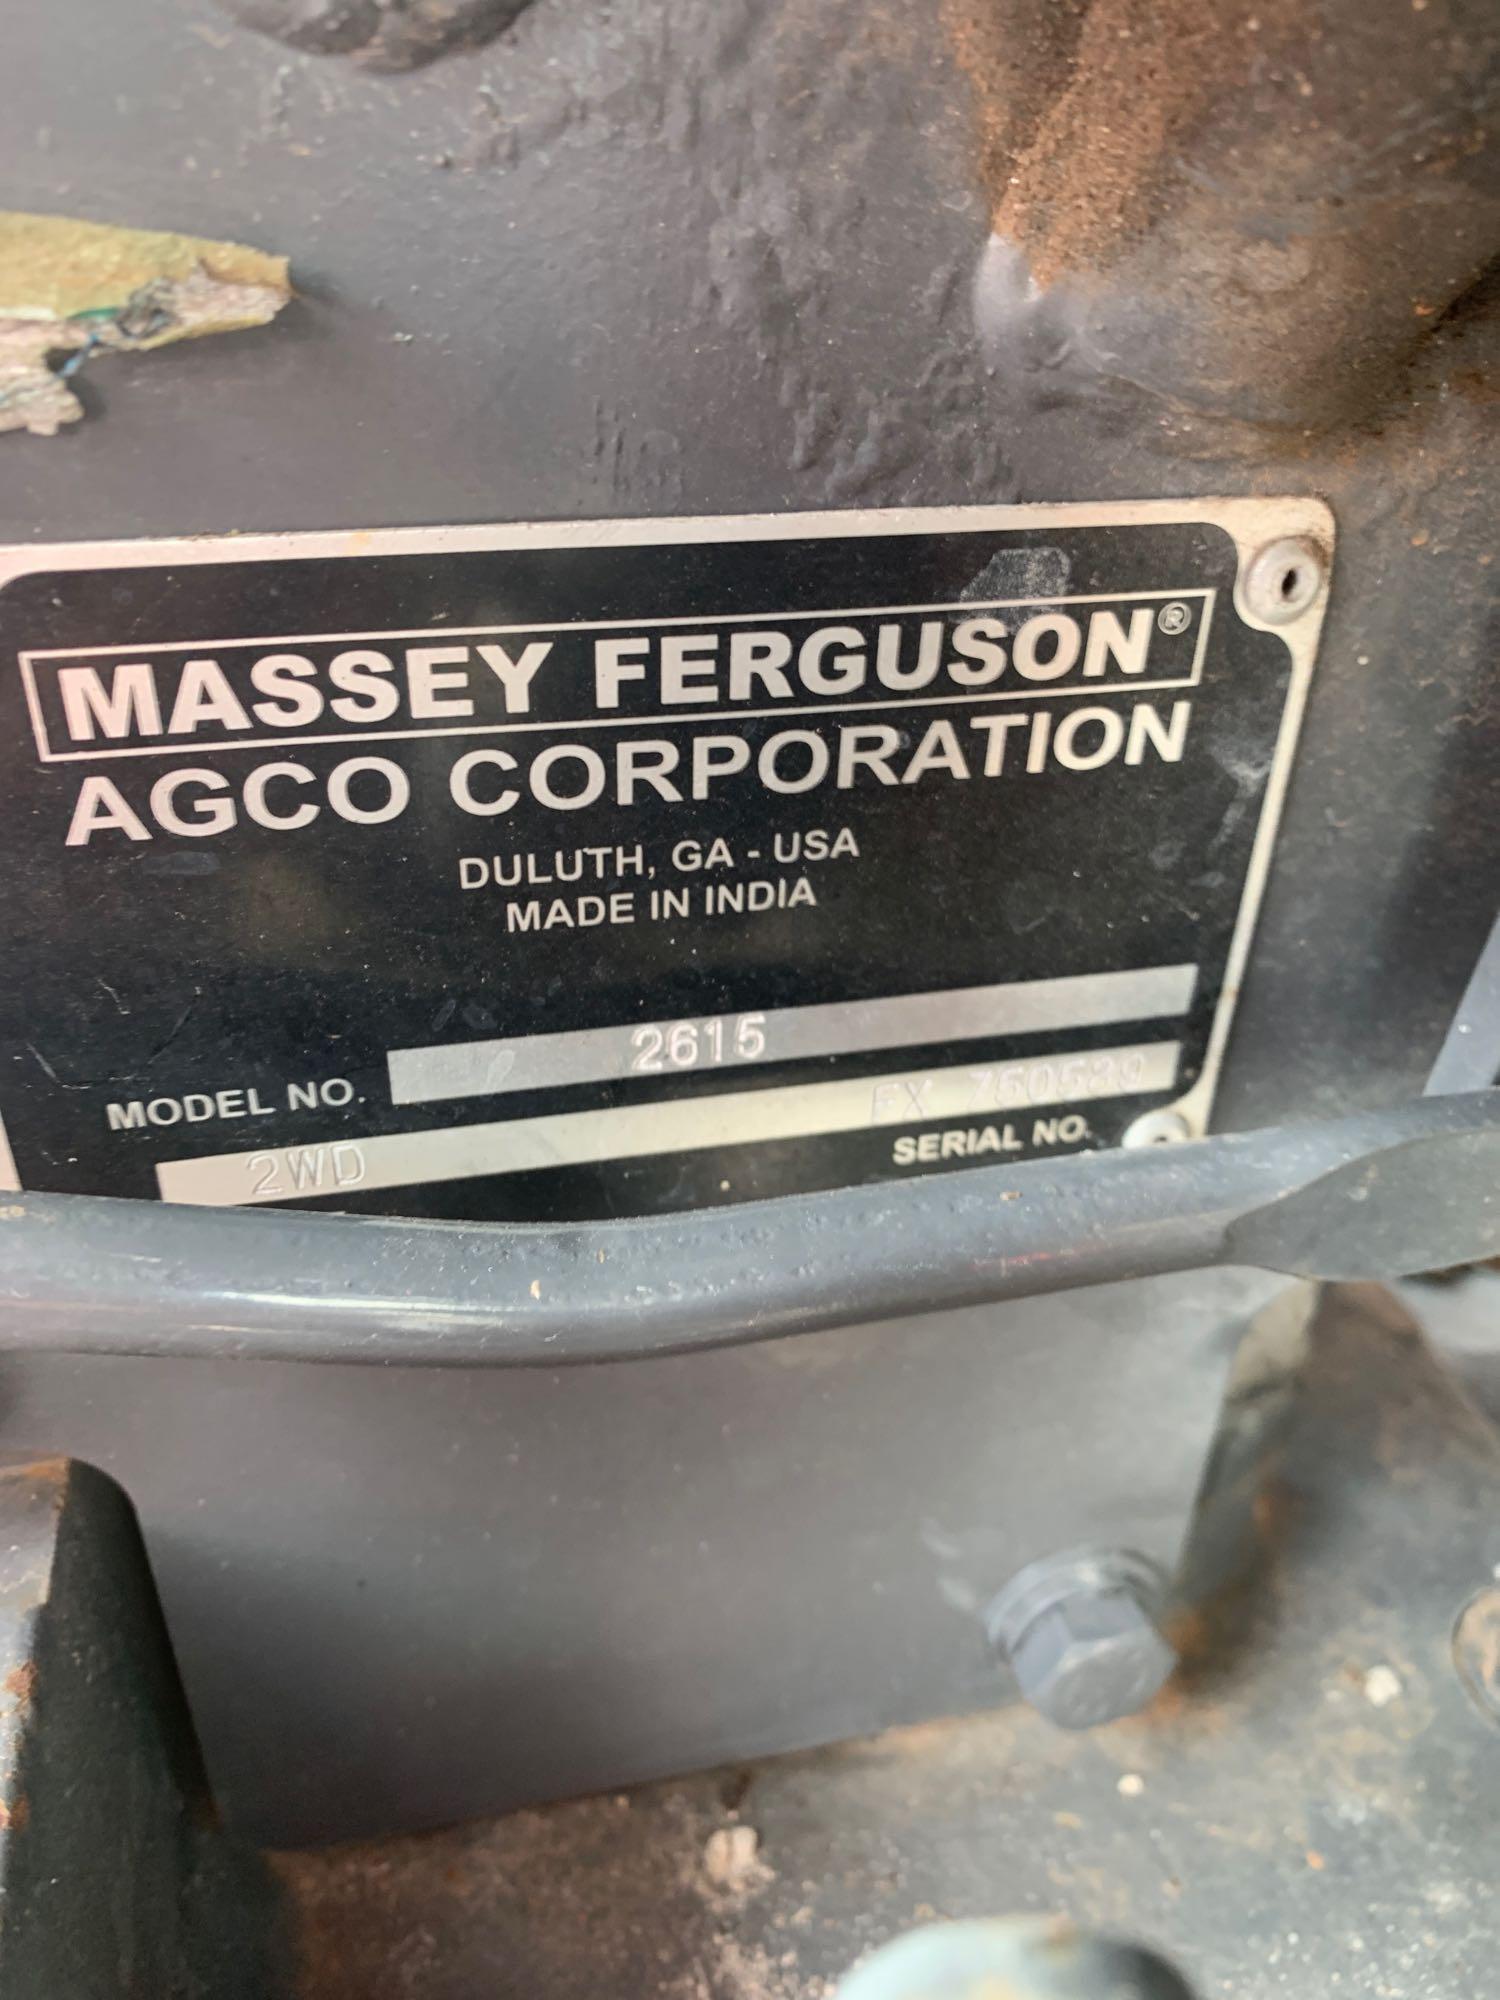 Massey Ferguson 2615 Front Loader Tractor